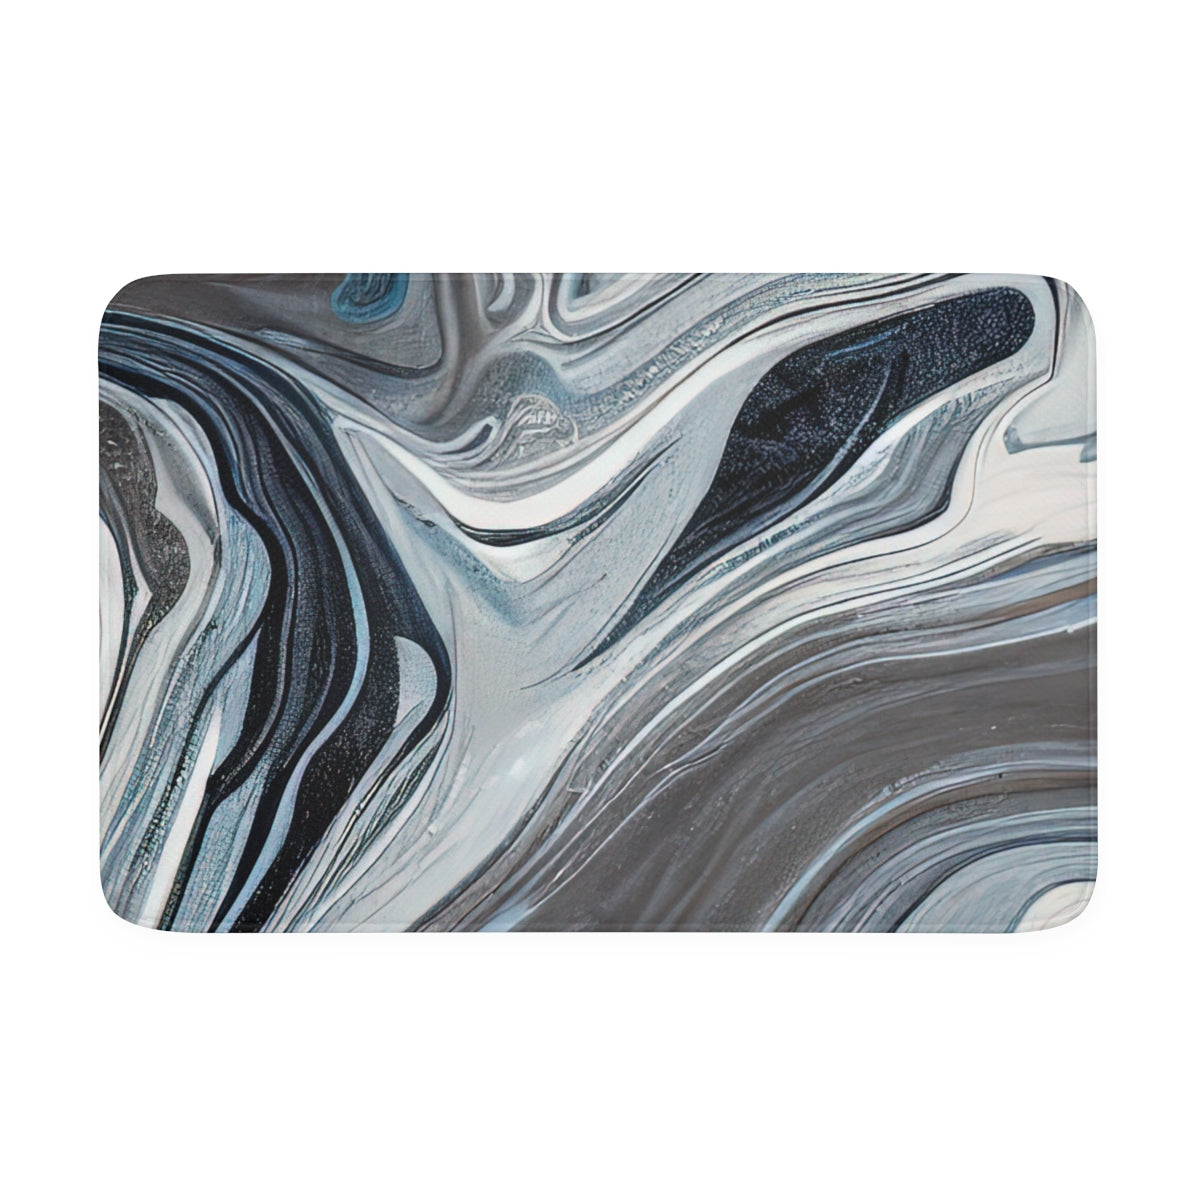 Memory Foam Bath Mat | White, Dark Blue, And Gray Marble